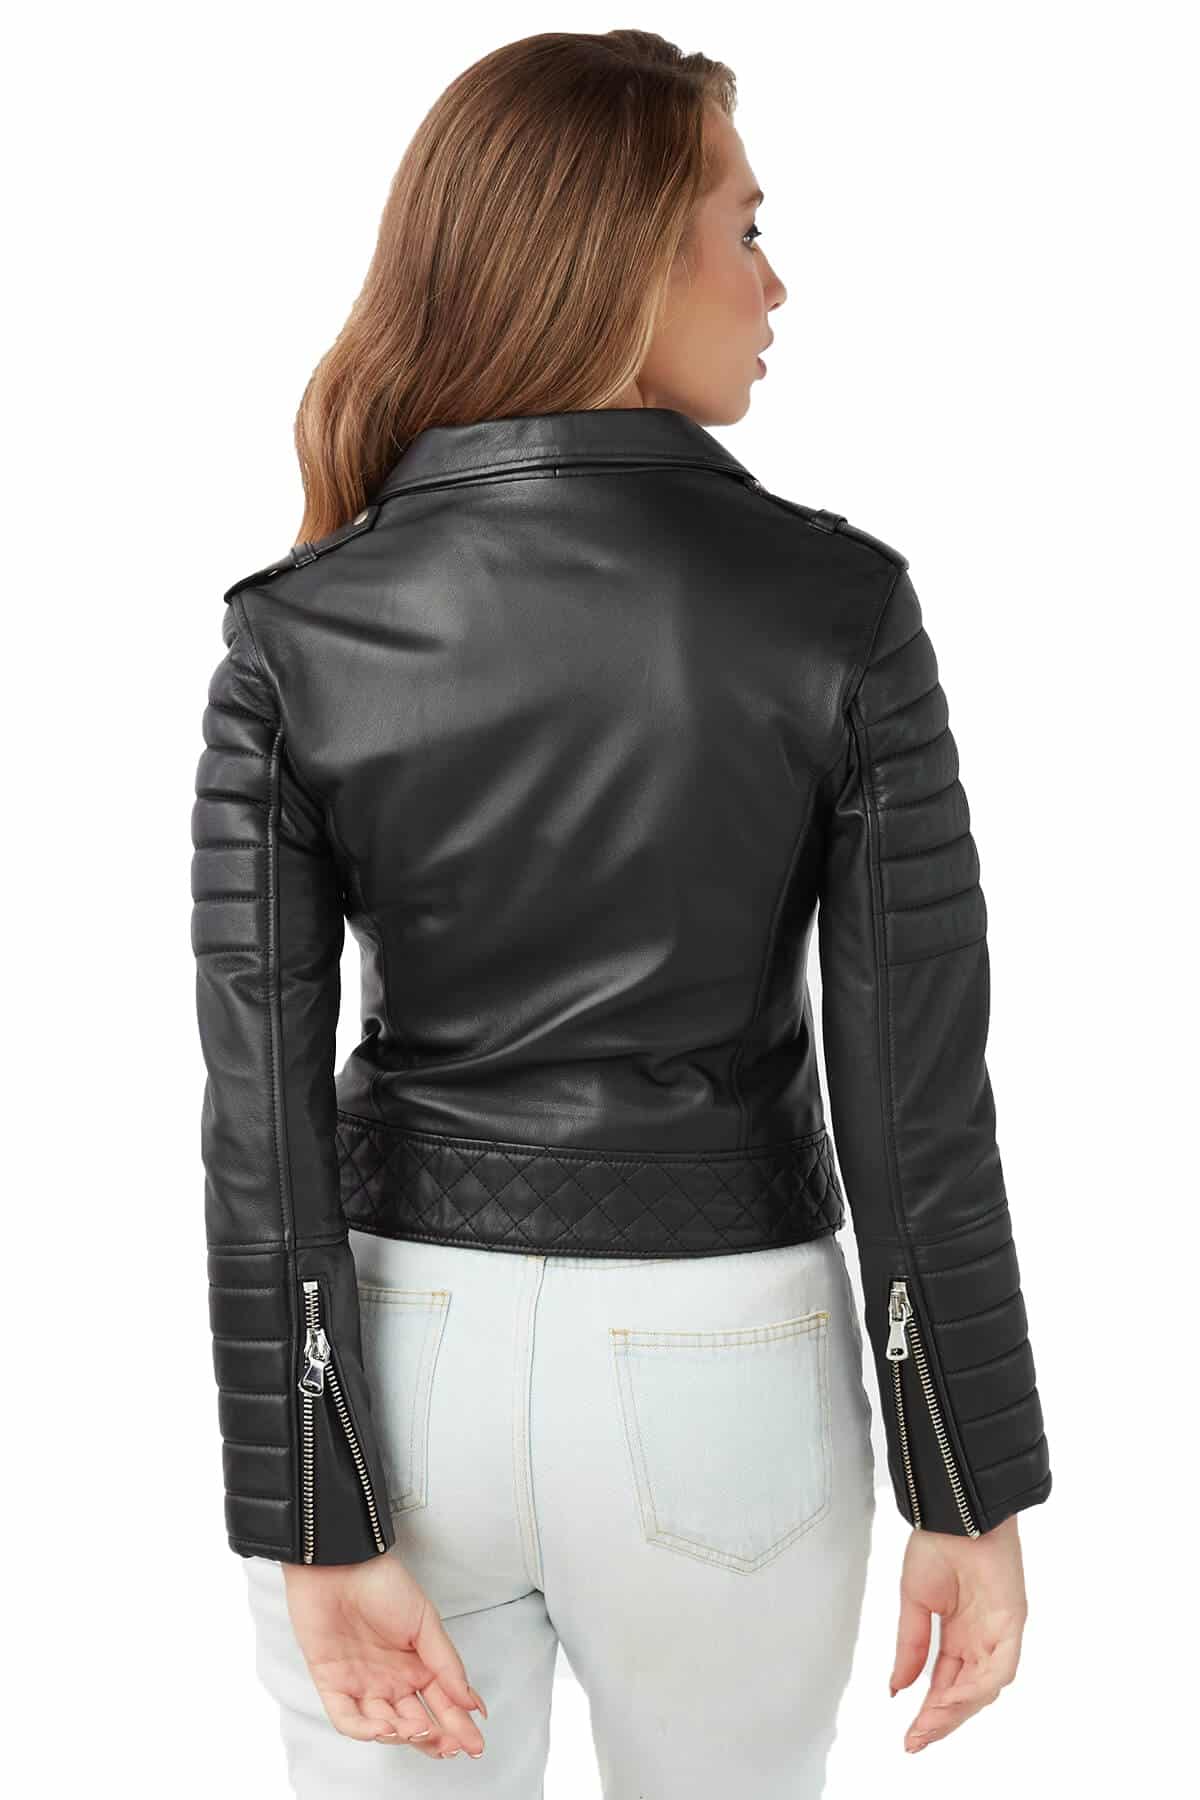 Ladies Leather Look Thermal Jacket, Black Sexy Thermal Sports Jacket